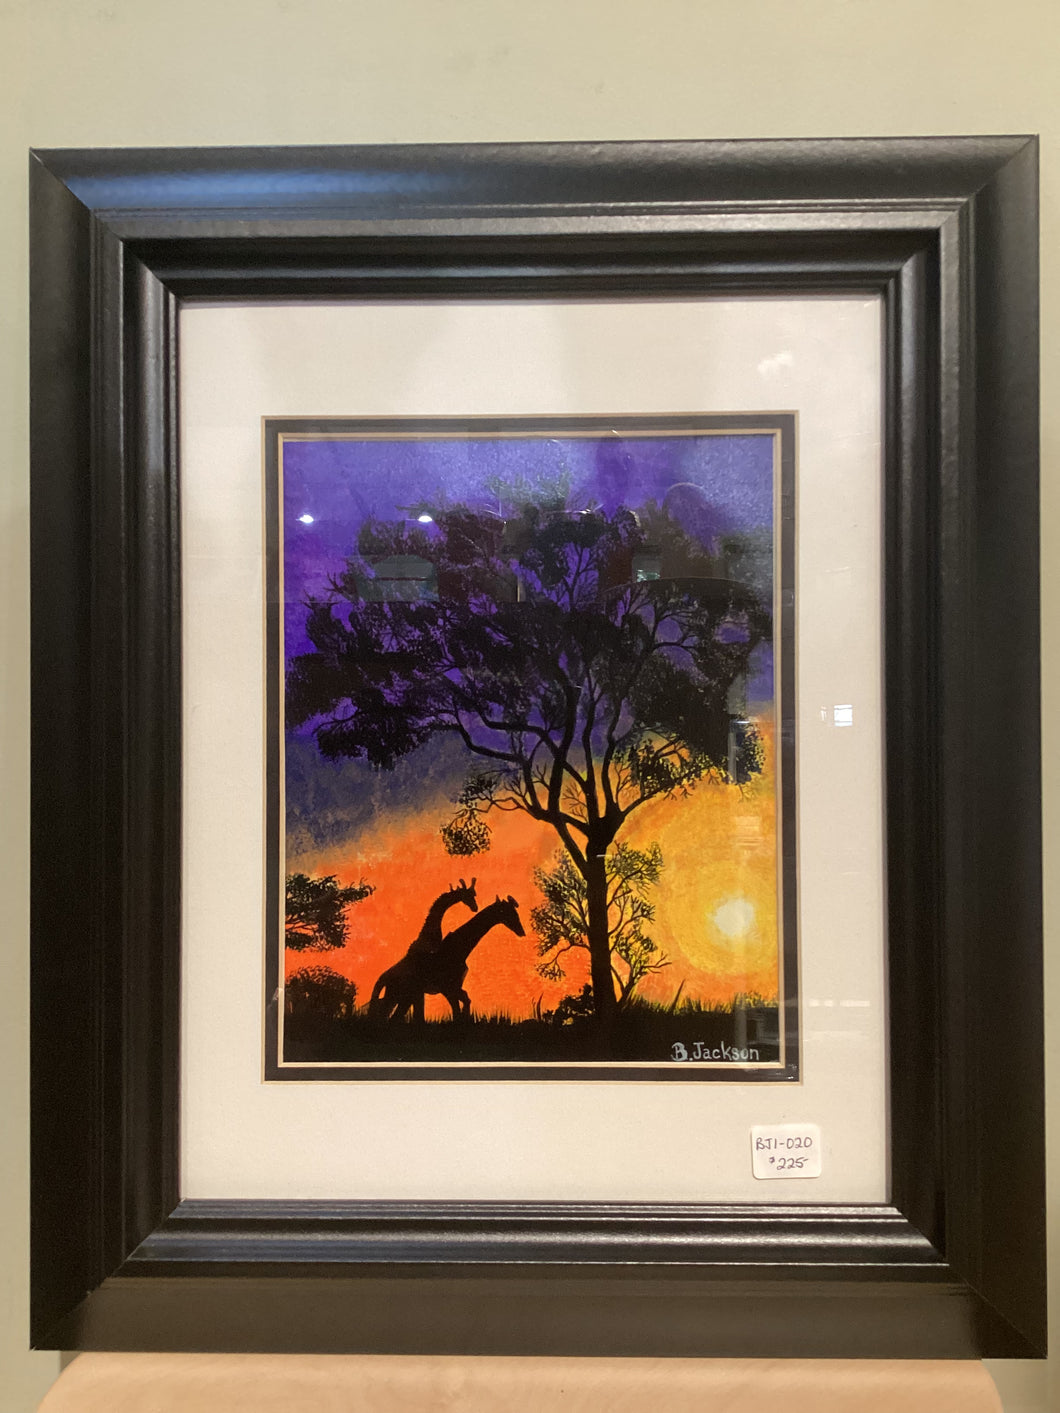 BJ1-020 Framed Hand Painted African Sunset